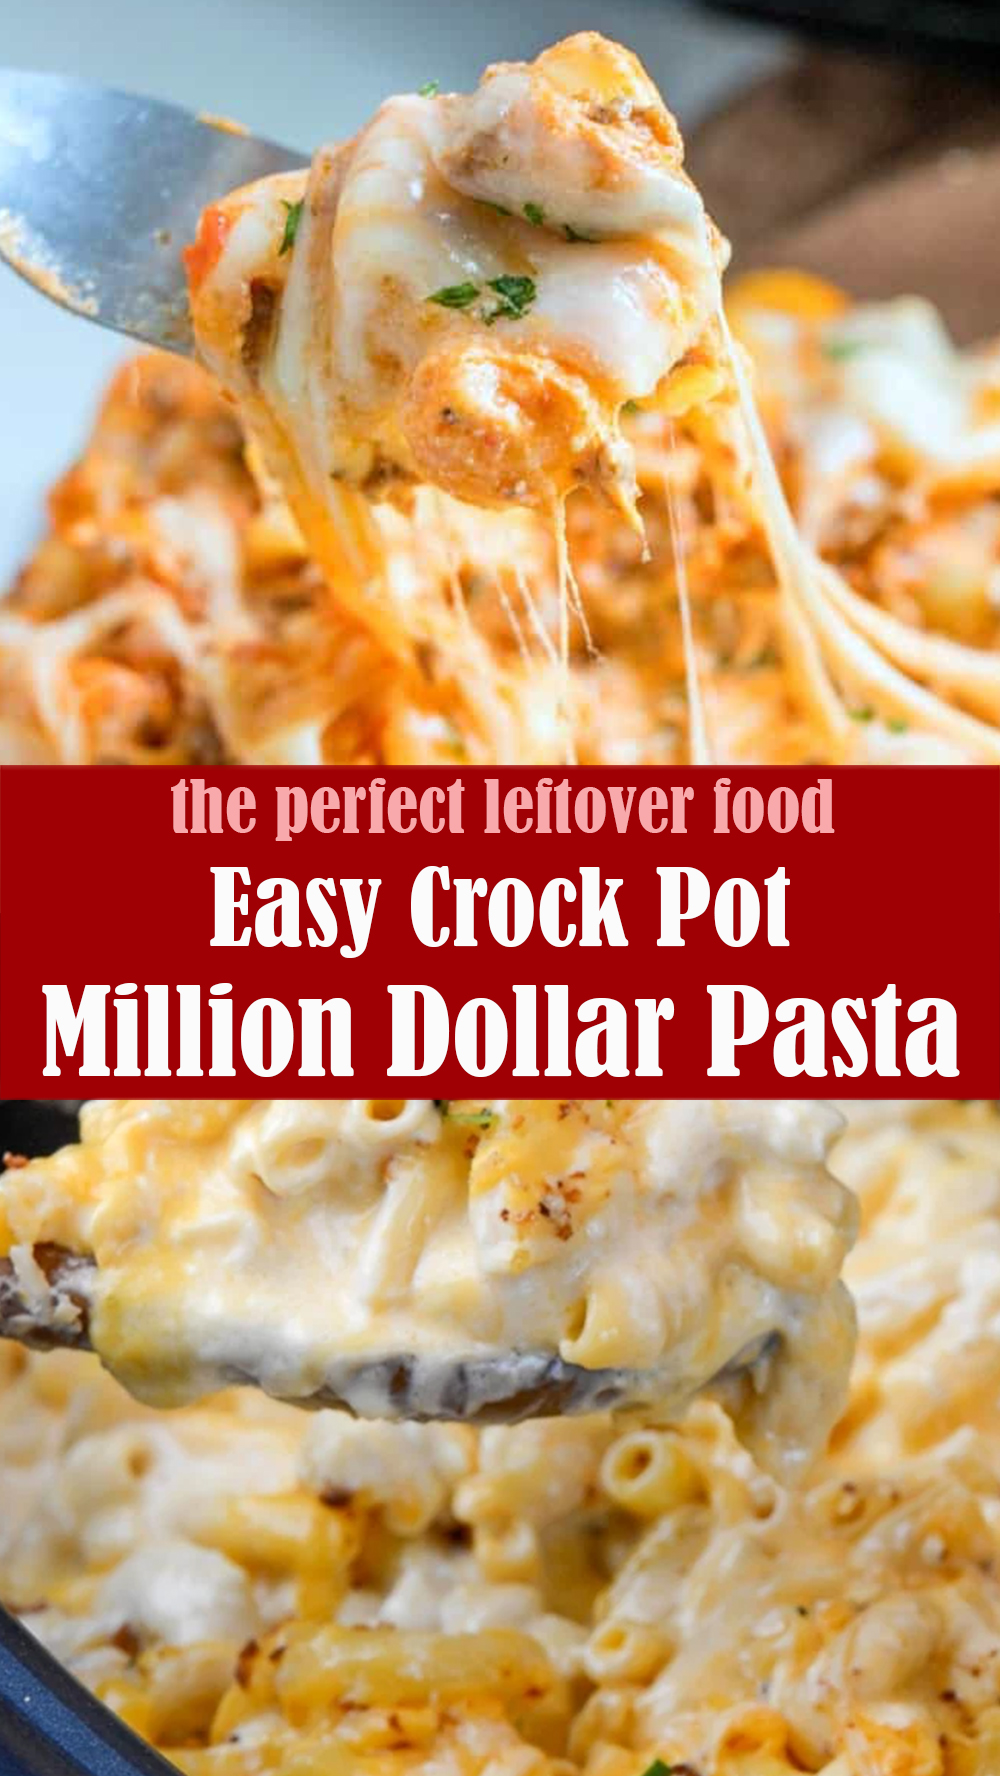 Easy Crock Pot Million Dollar Pasta